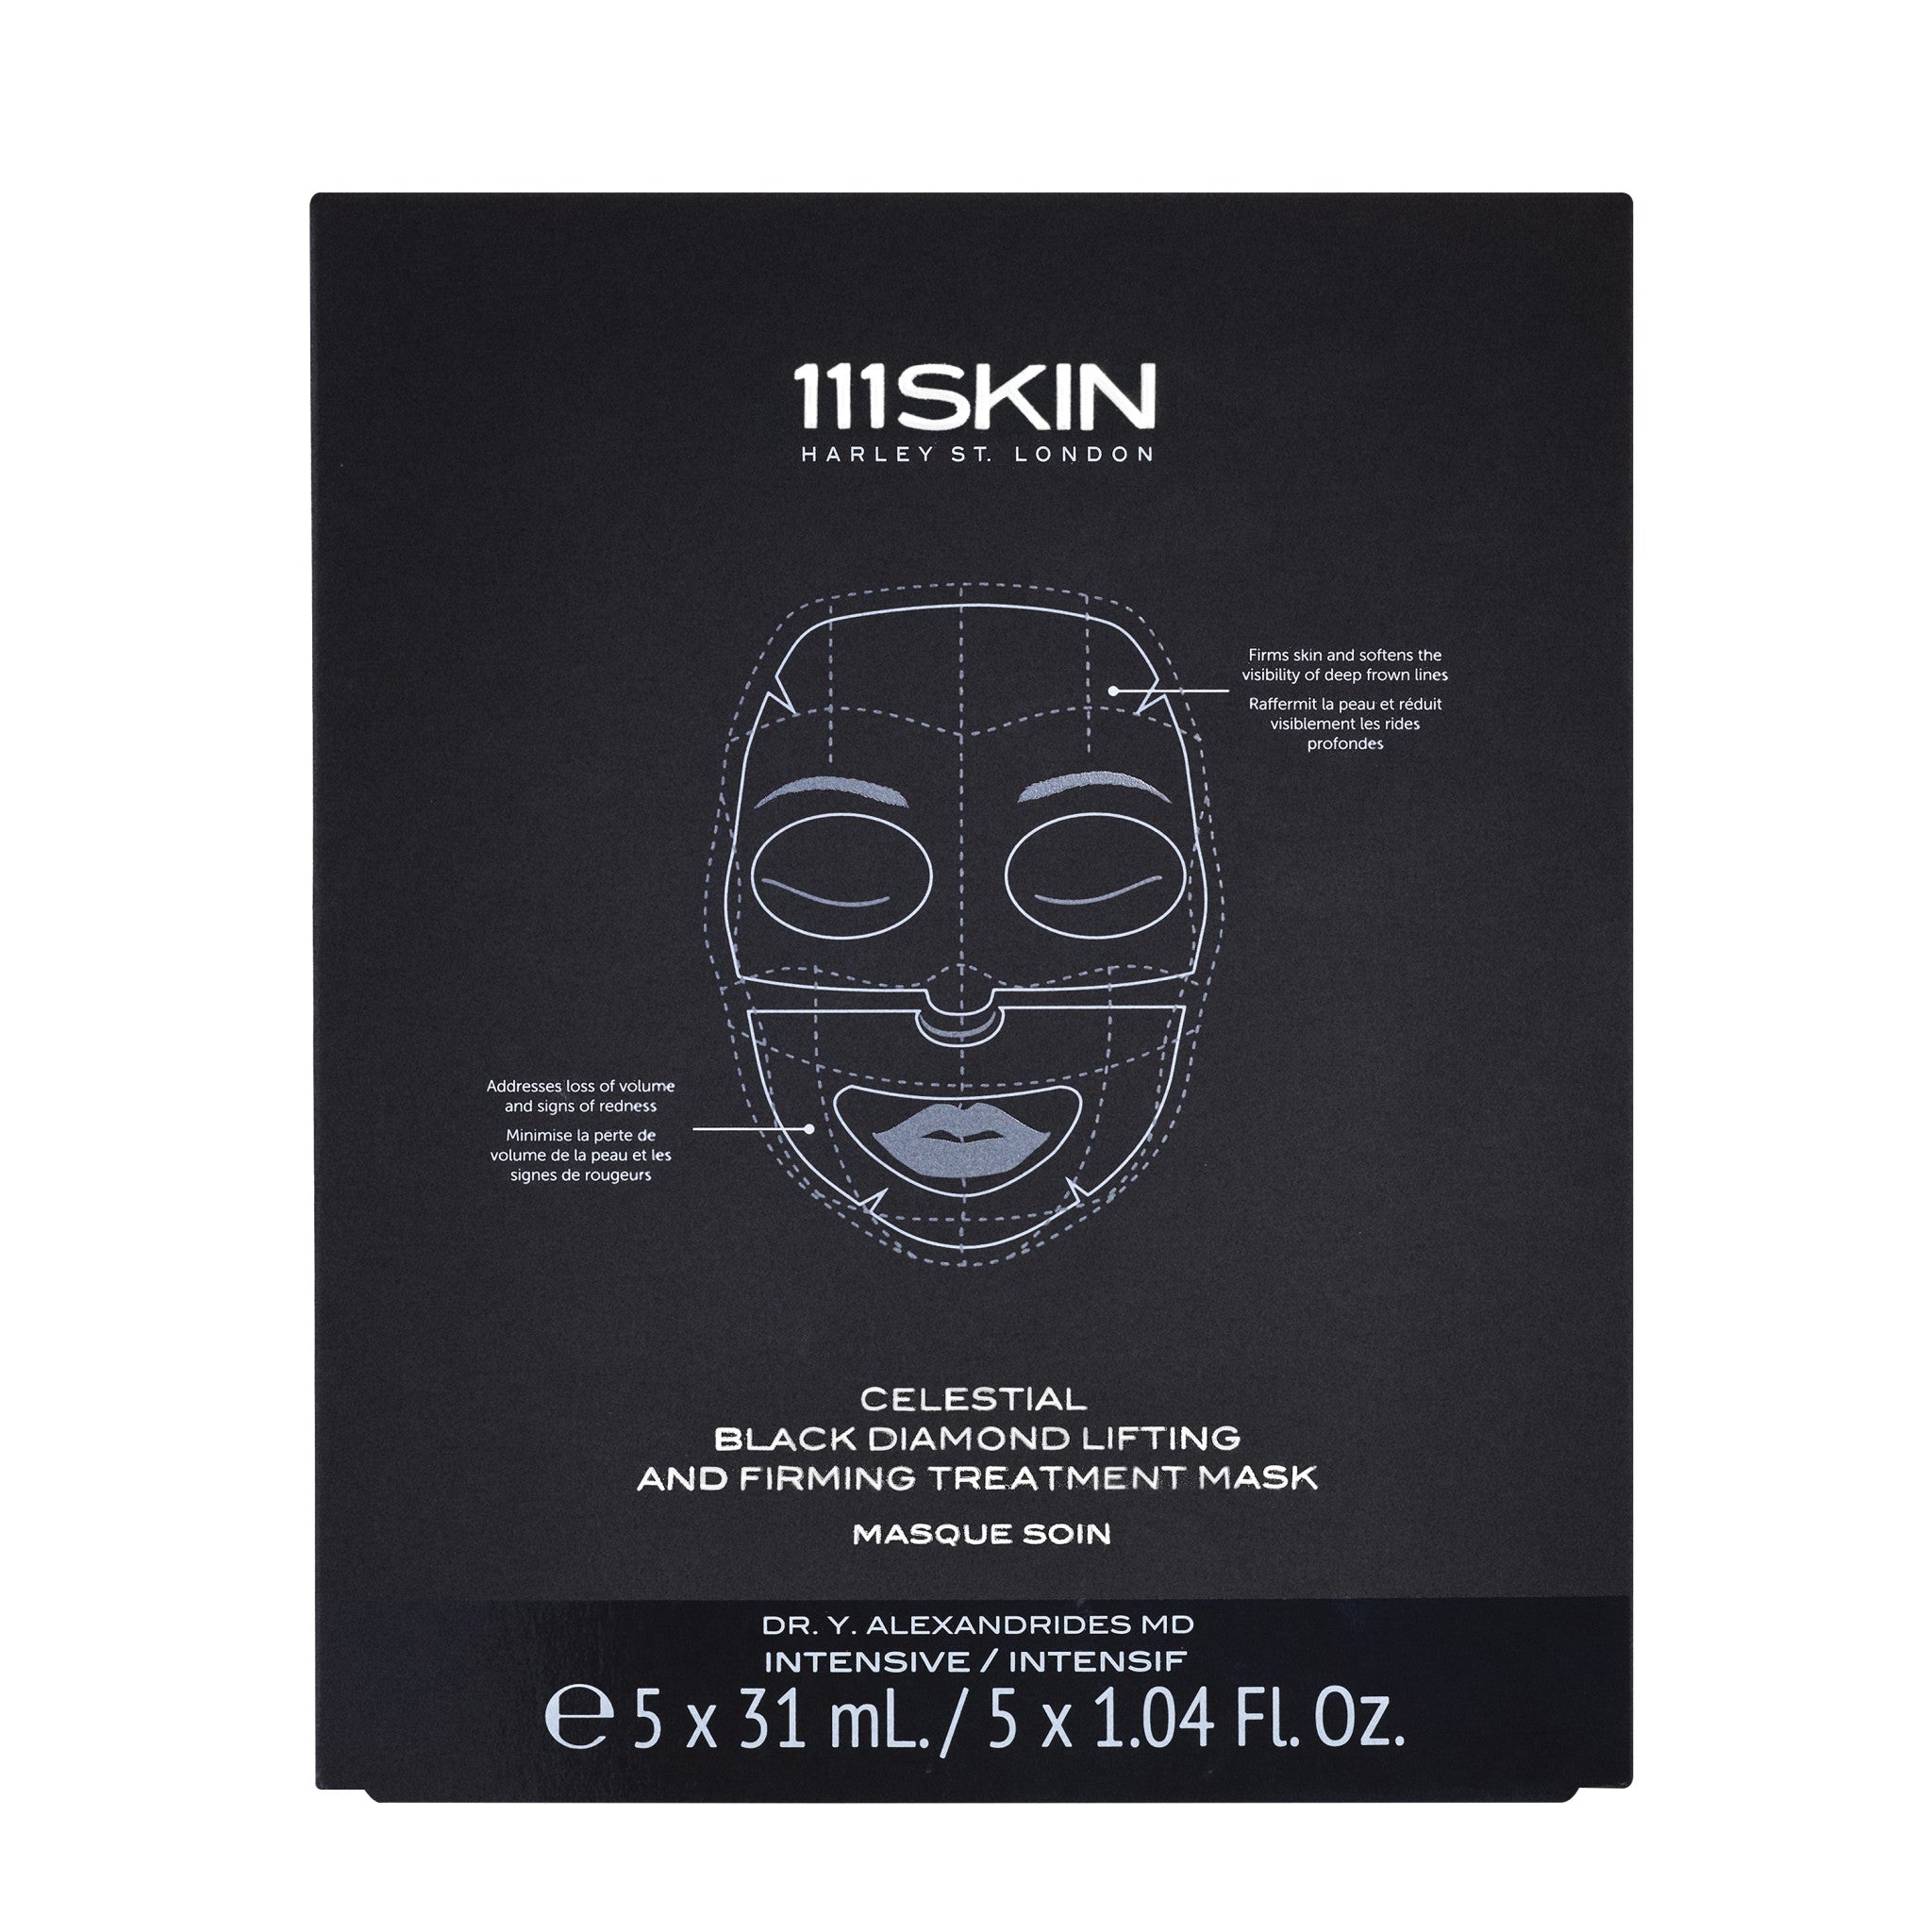 111SKIN Celestial Black Diamond Lifting and Firming Treatment Mask Box main image.